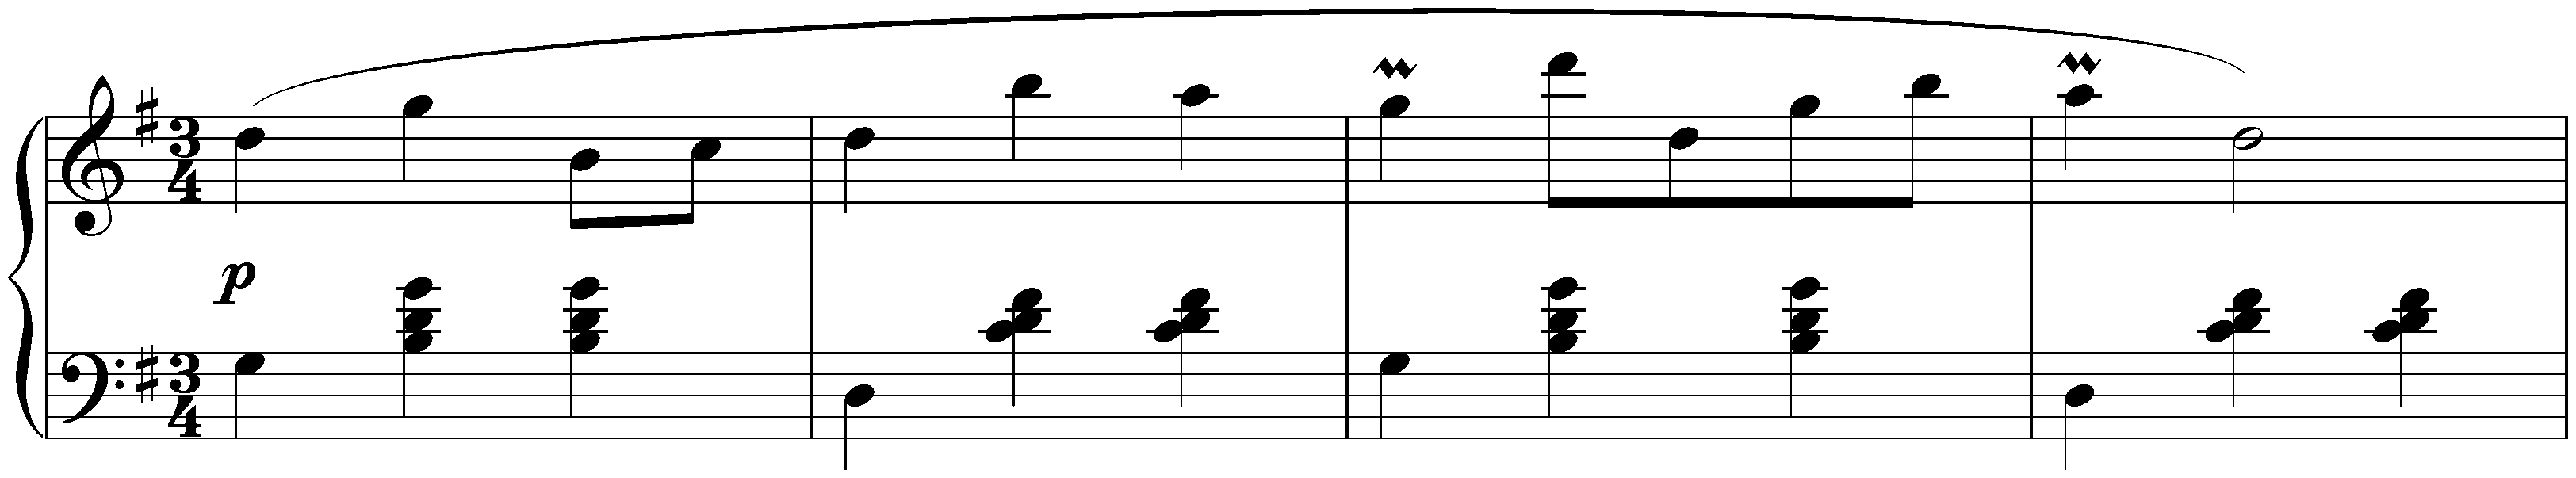 Twelve Waltzes, seventeen Ländler and nine Ecossaises, D 145; 28. Seventeen Ländler, no. 16 in G major